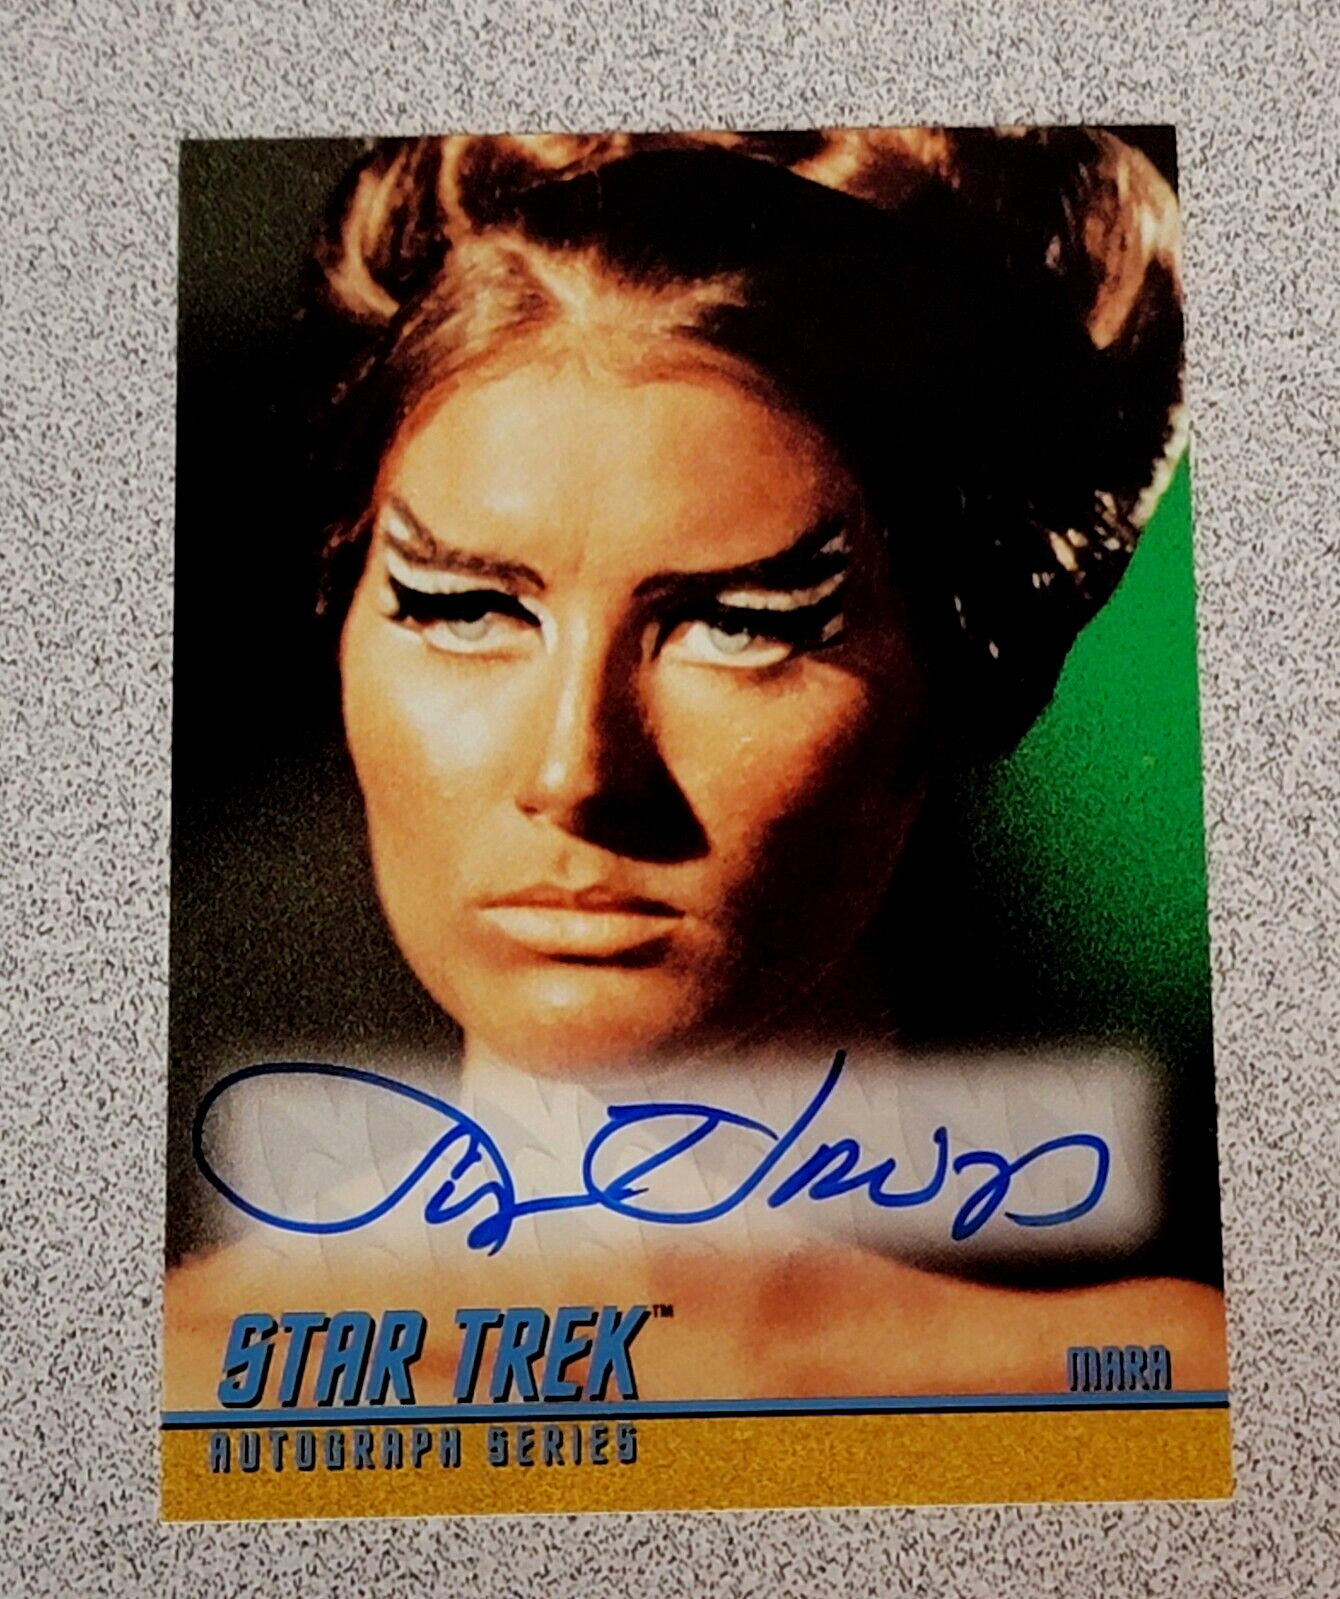 1999 Sky Box Original Star Trek Series Susan Howard Mara Auto Signed Actor Card